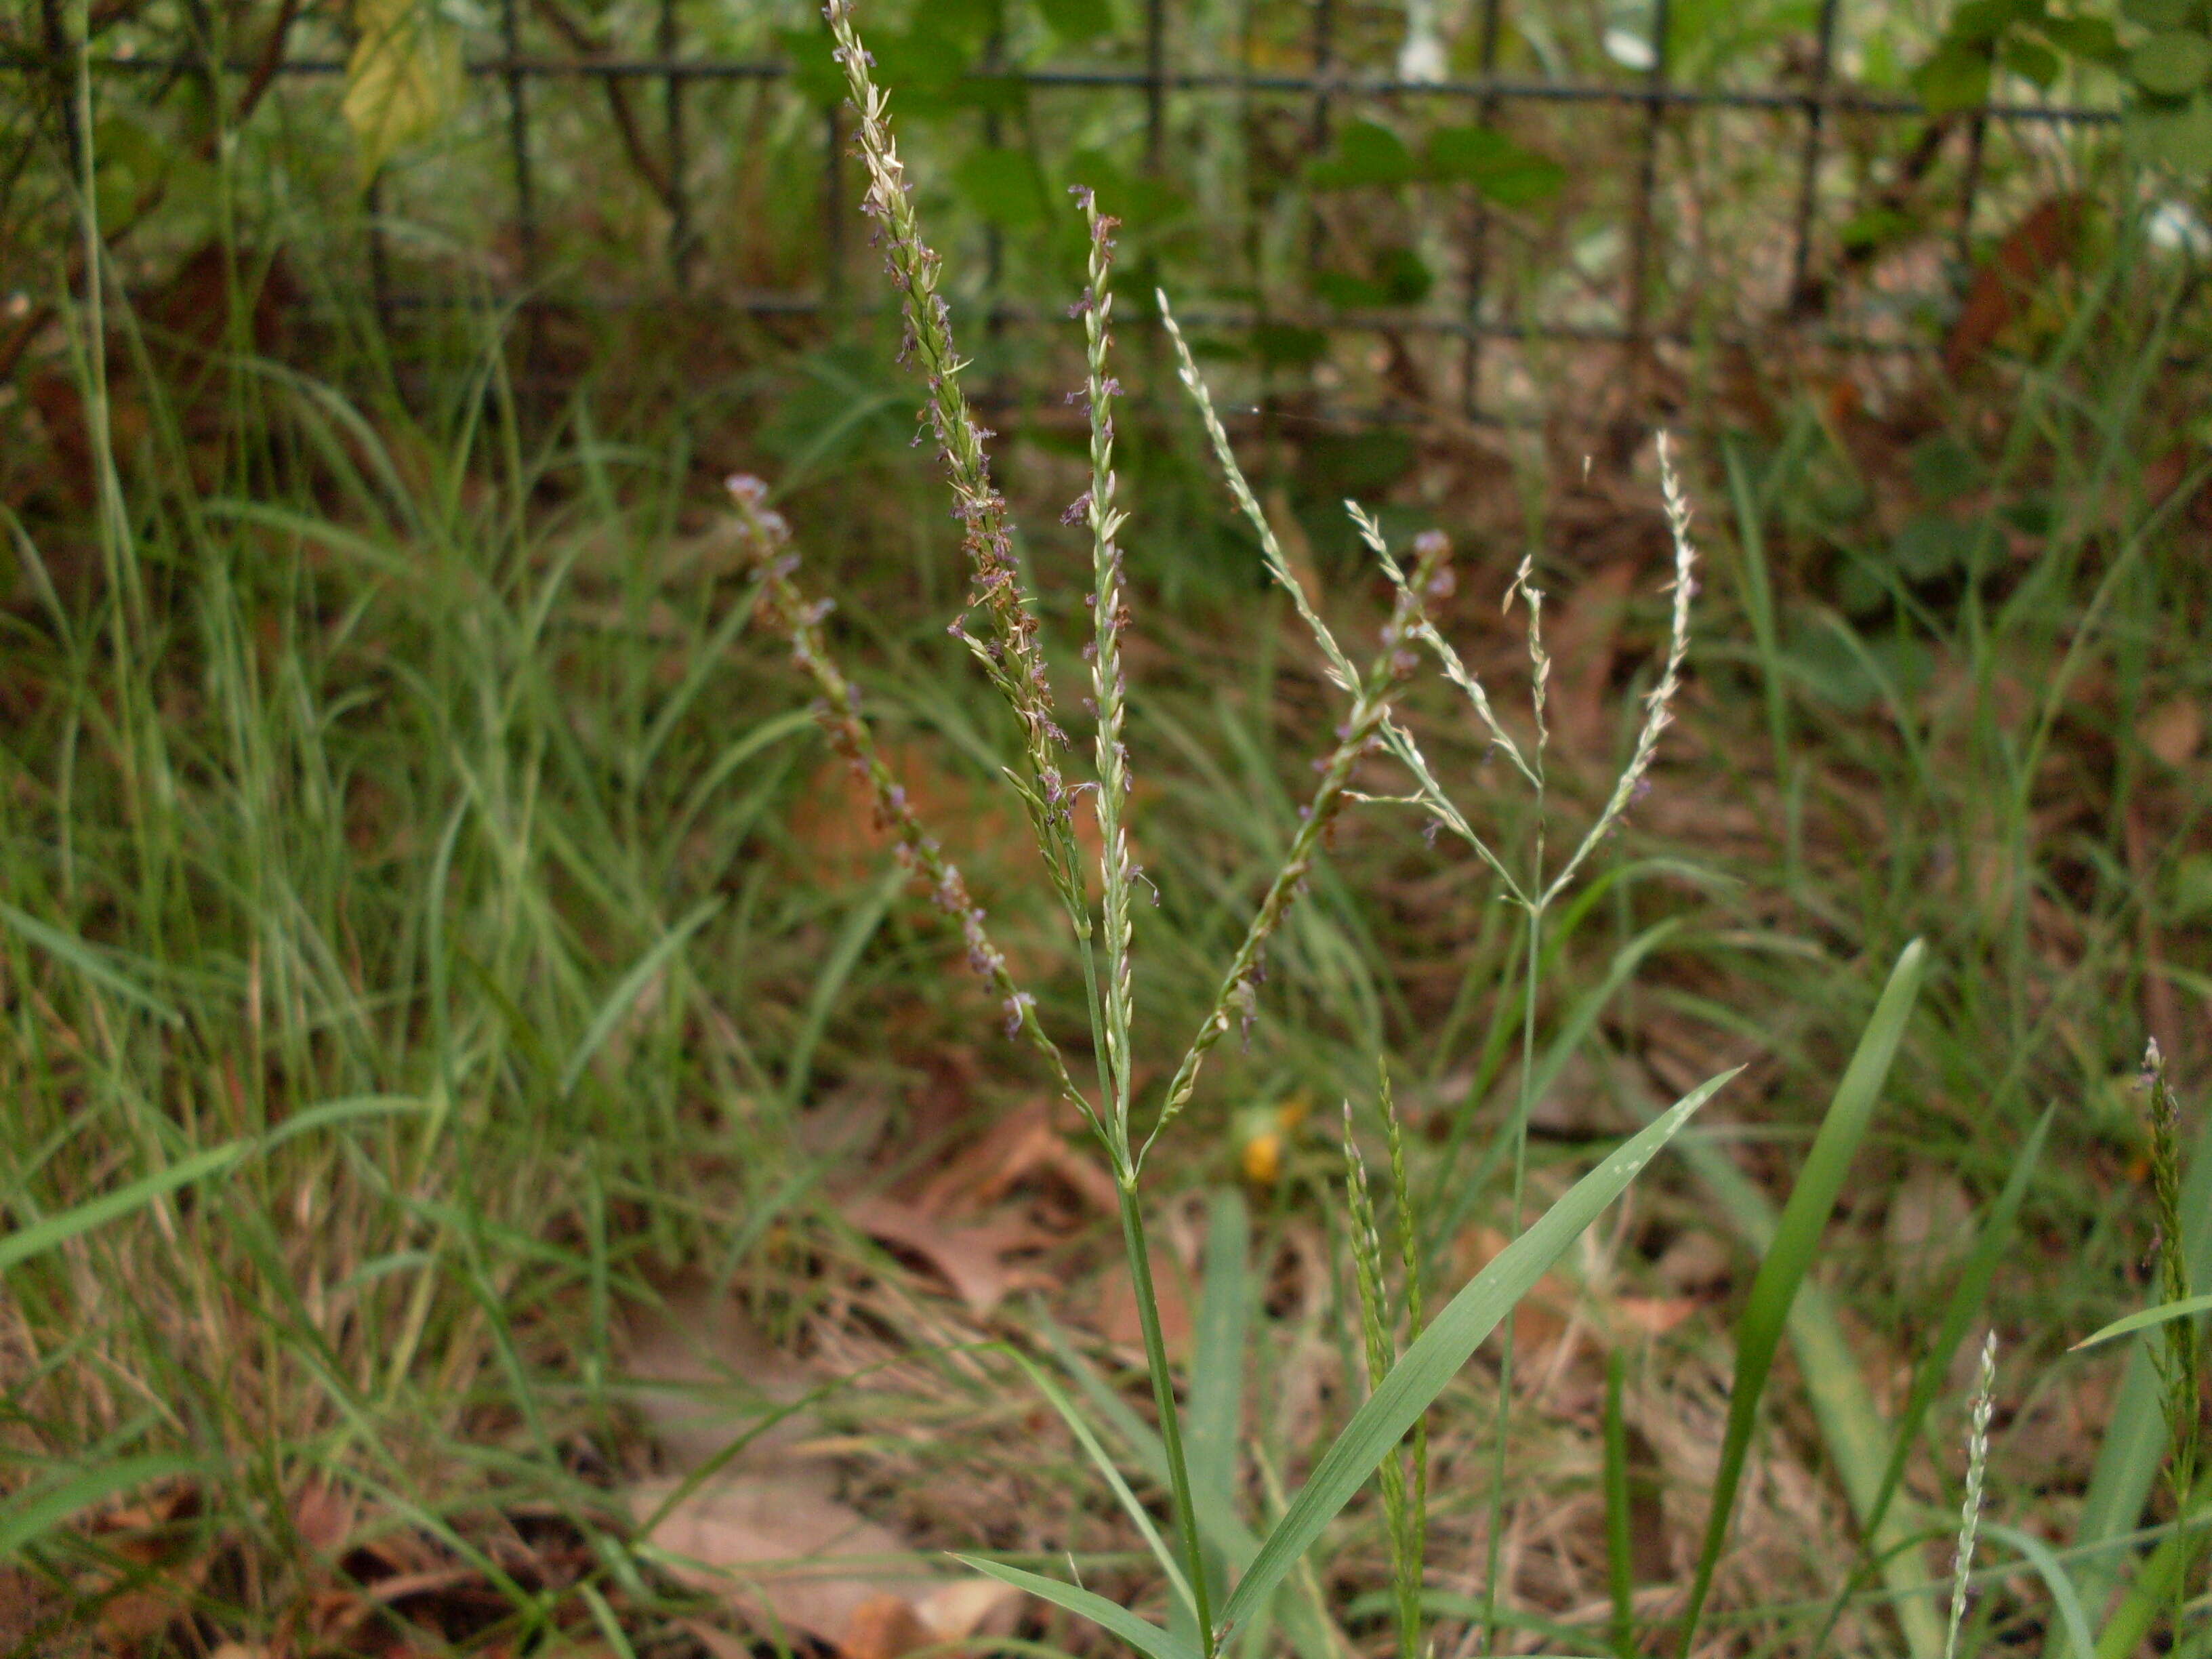 Image of crabgrass